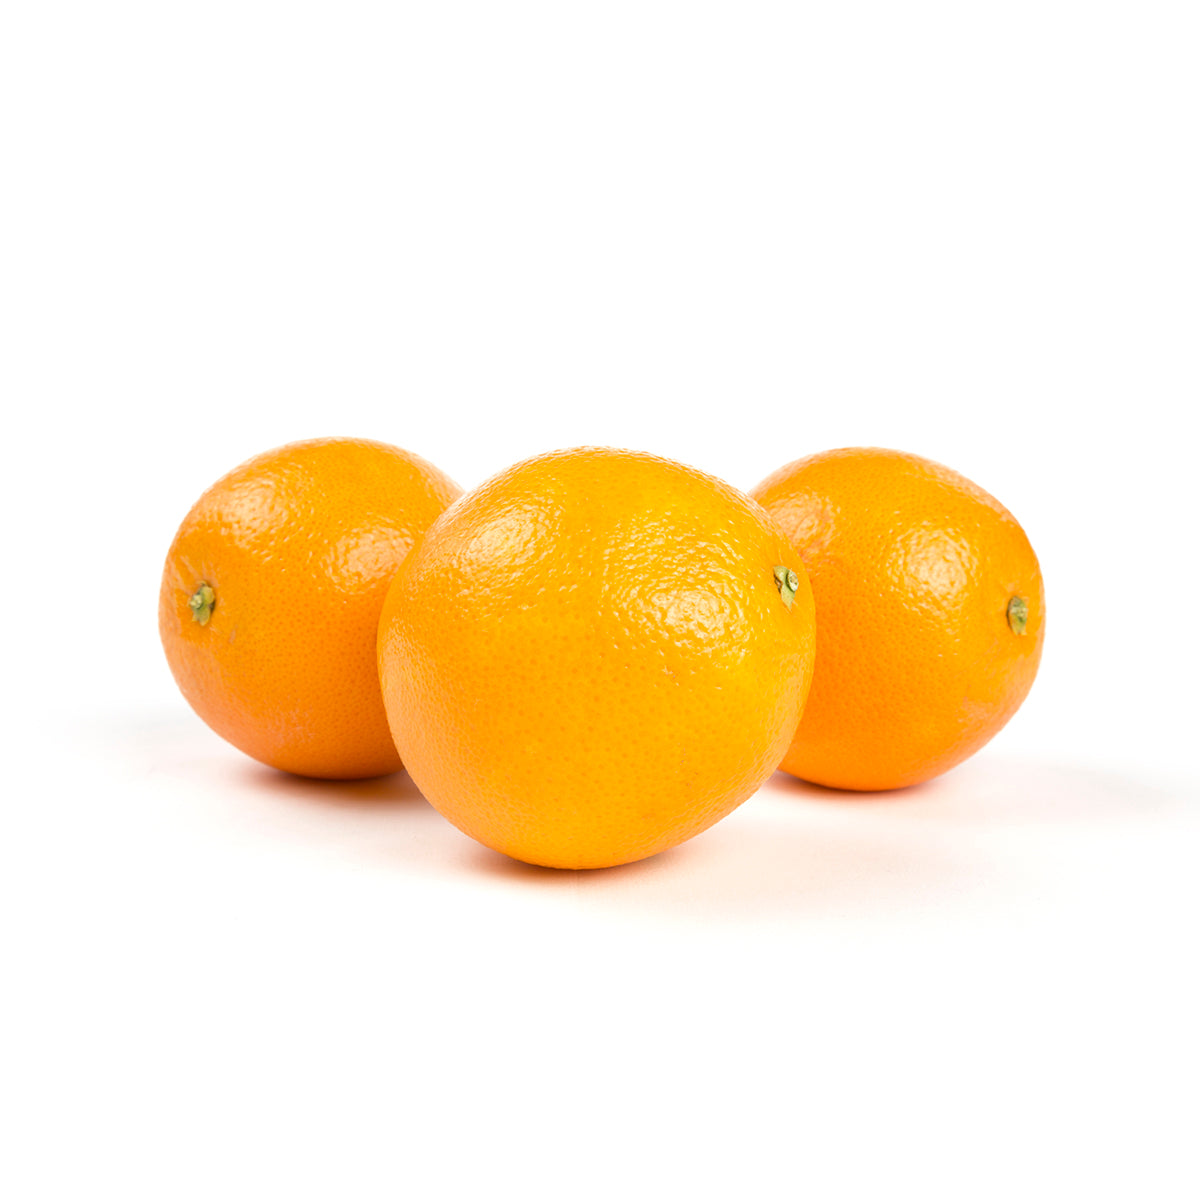 Bernard Ranches Navel Oranges